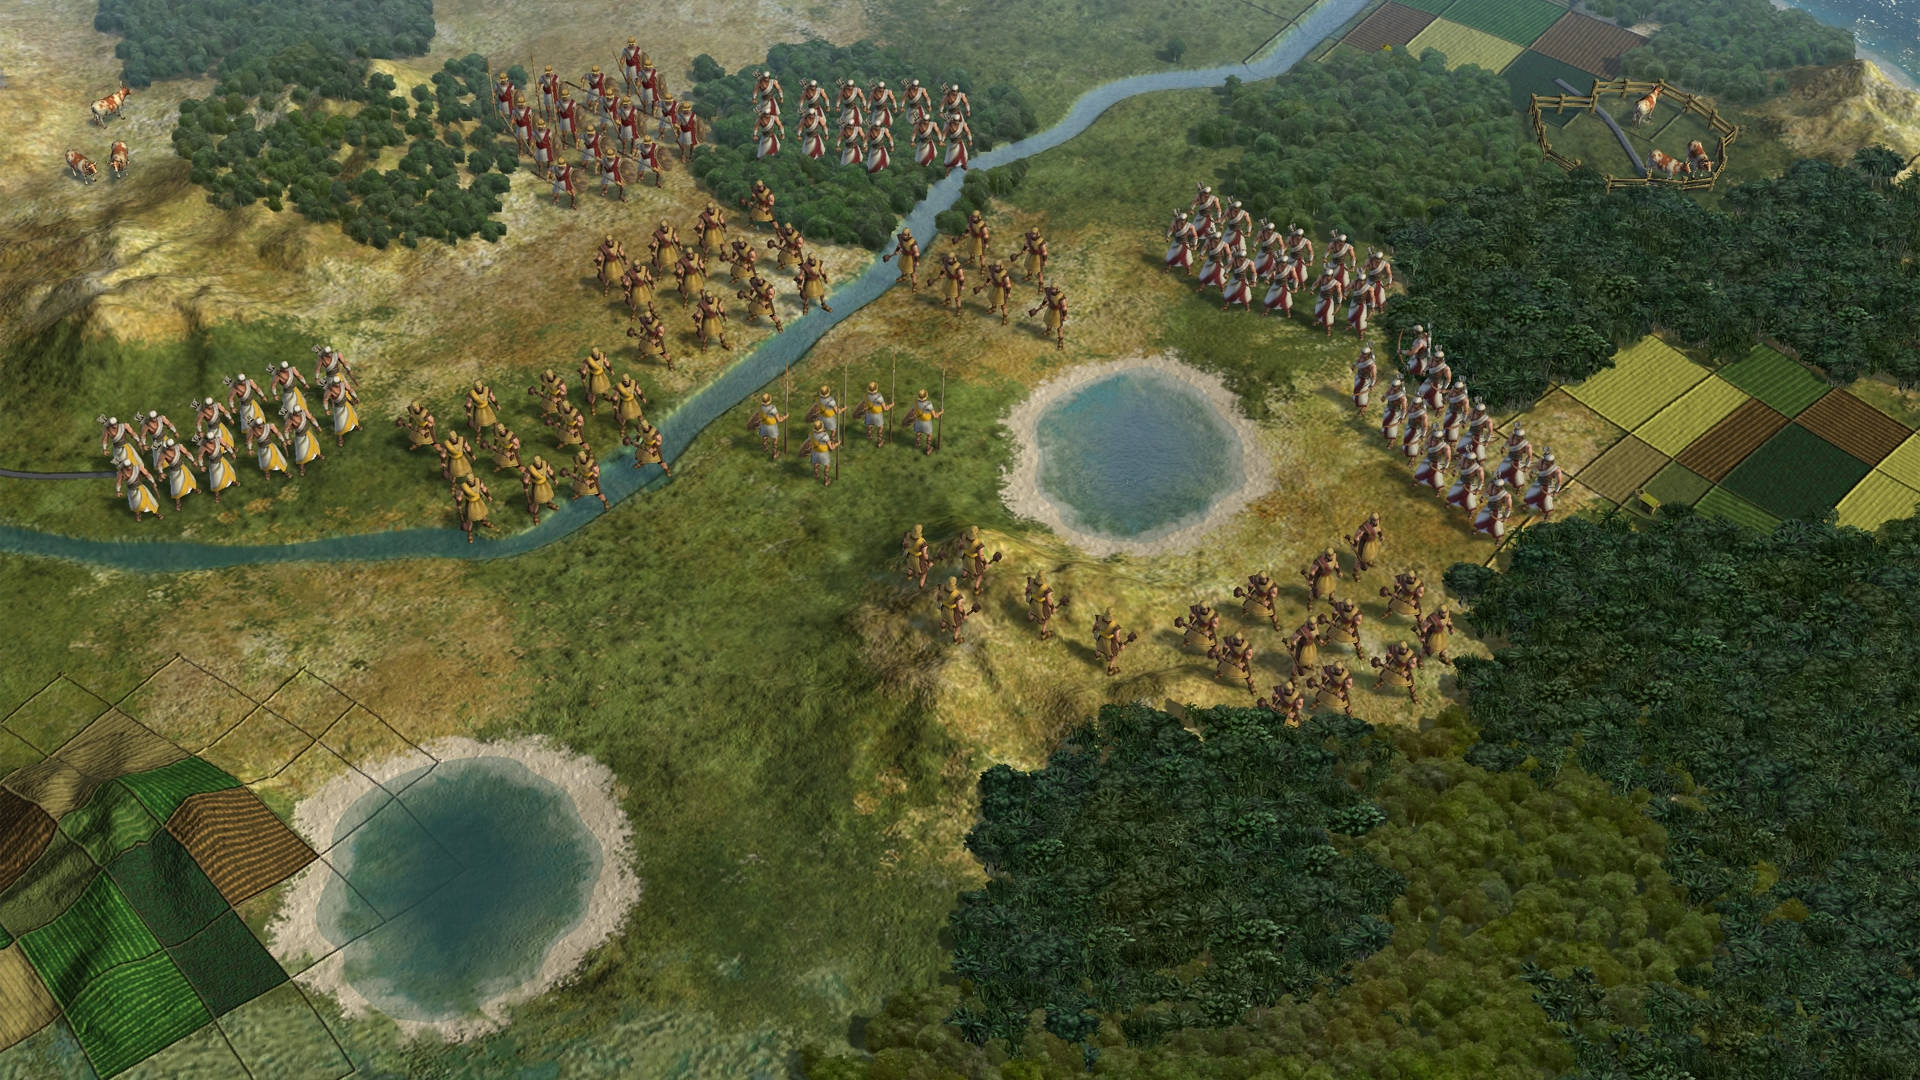 Epic Game Scene From Civilization 5